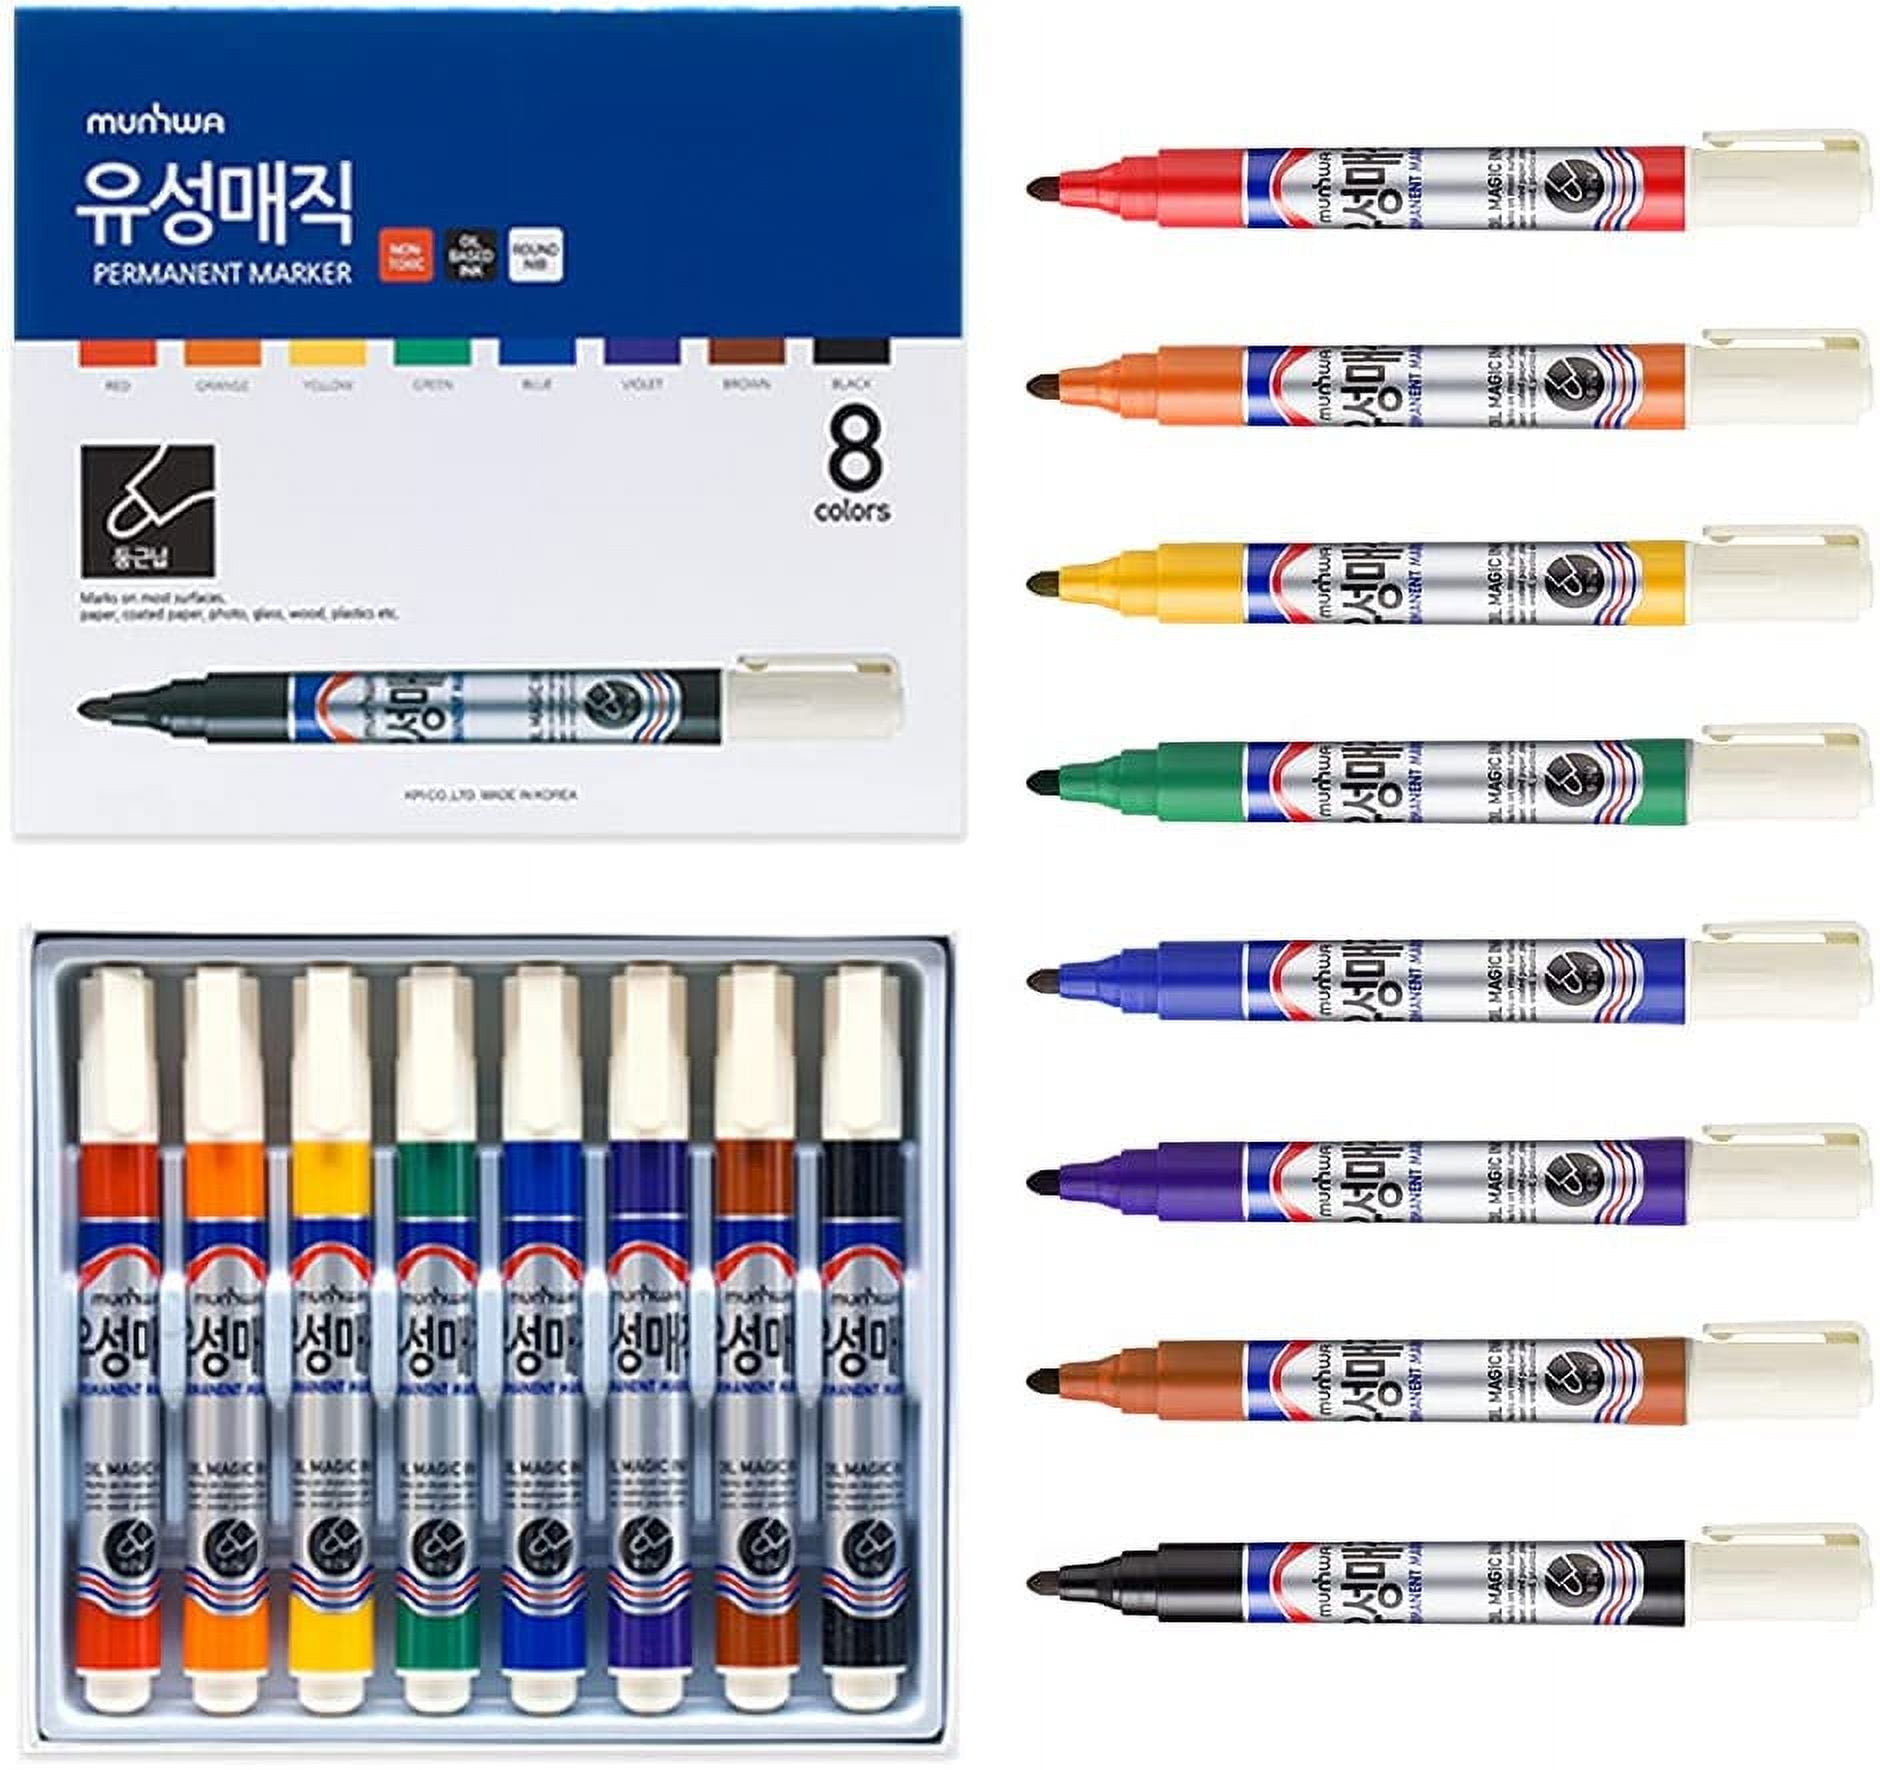 Munhwa Permanent Markers Pens, 8 Colors, Medium Point, Alcohol